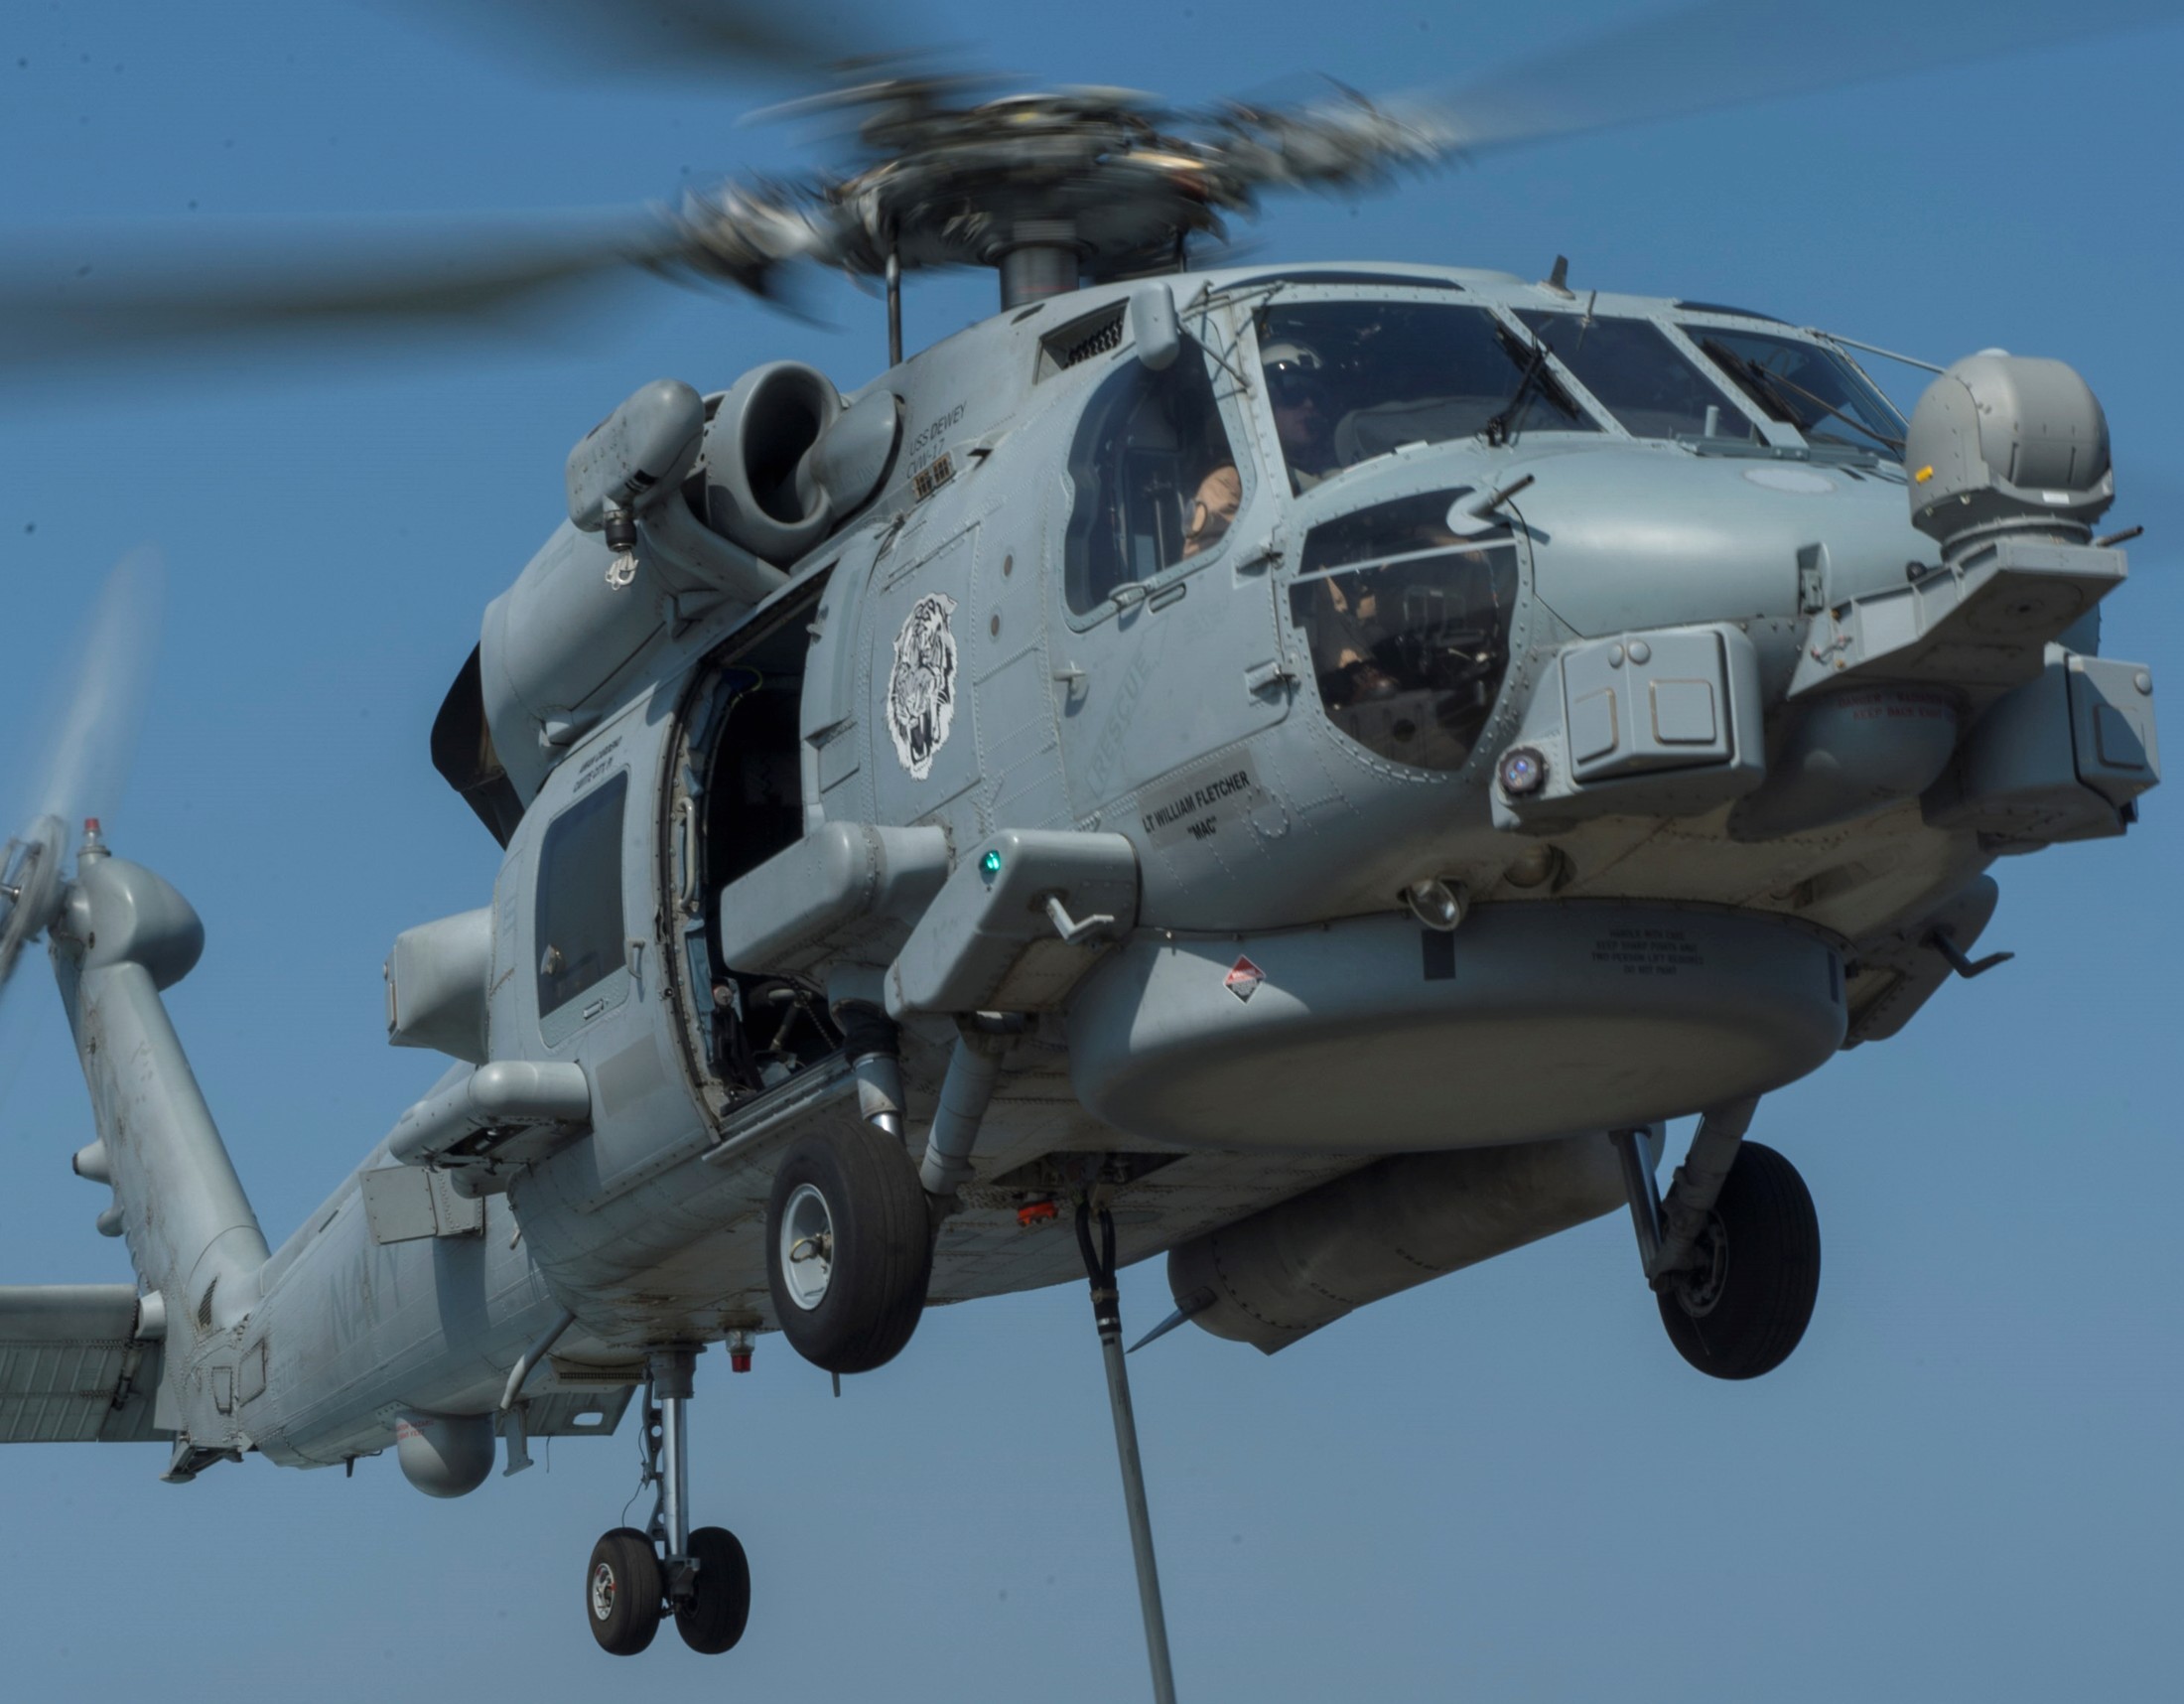 hsm-73 battlecats helicopter maritime strike squadron us navy mh-60r seahawk 2015 11 uss dewey ddg-105